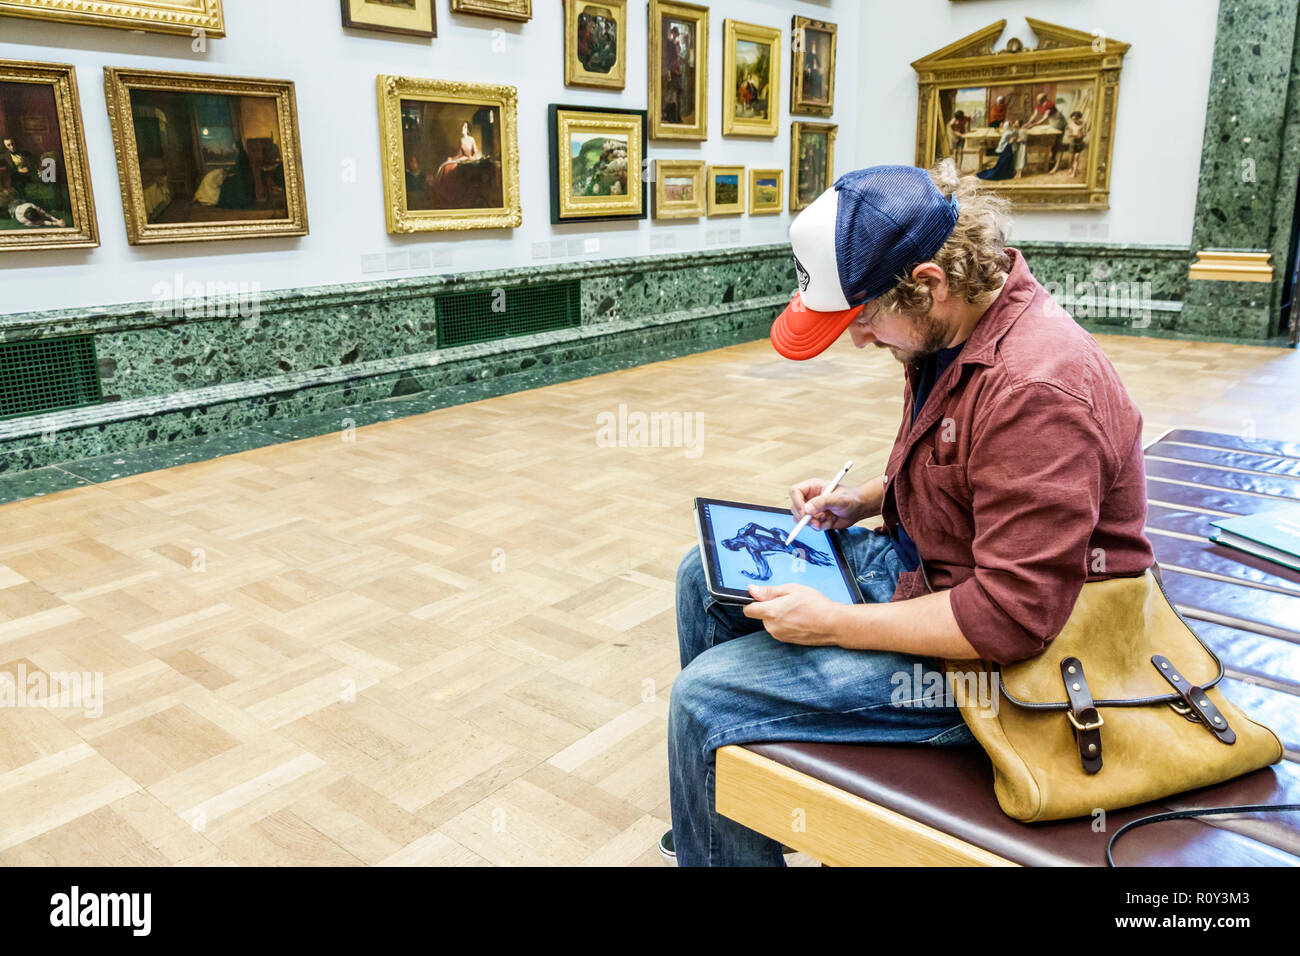 London England,UK,Westminster,Millbank,TateBritain art museum,inside interior,gallery,paintings,man men male,copyist,drawing,sketching,iPad tablet,sty Stock Photo